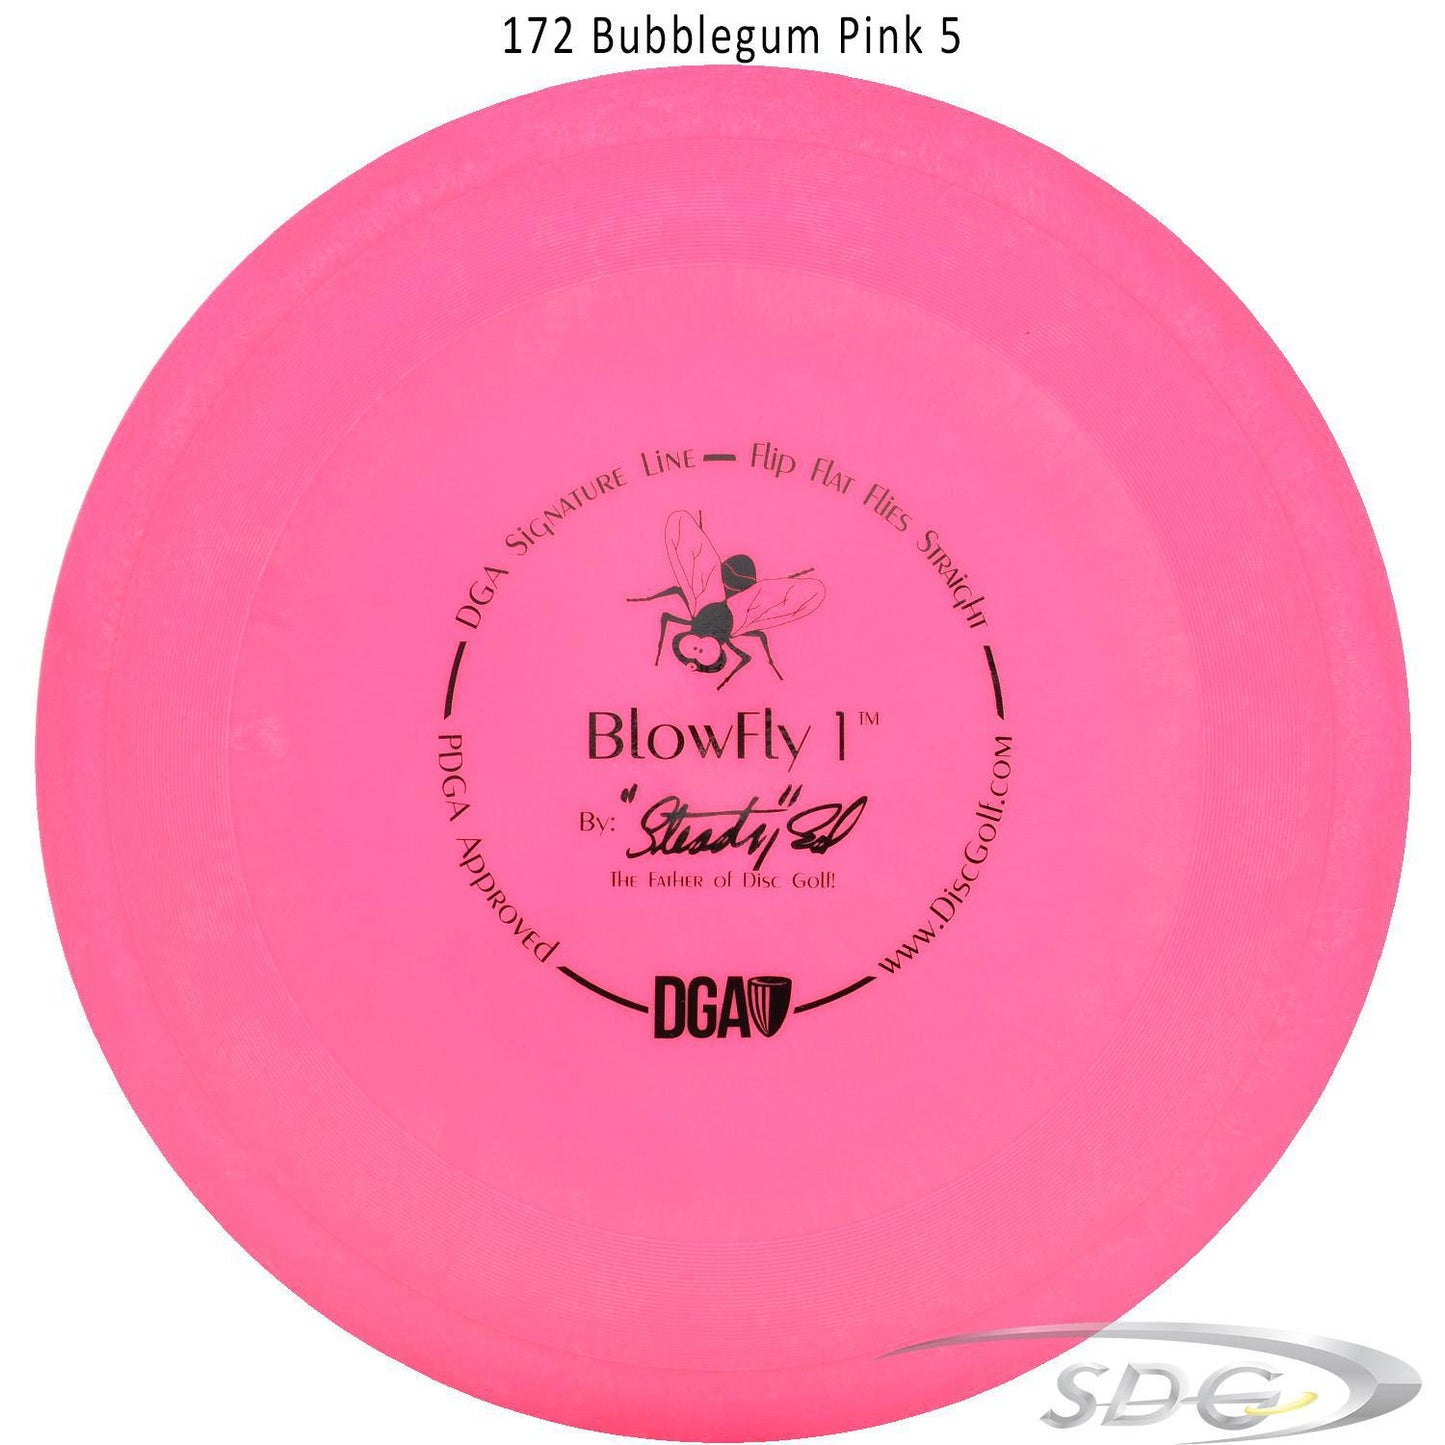 dga-signature-line-blowfly-1-disc-golf-putter 172 Bubblegum Pink 5 